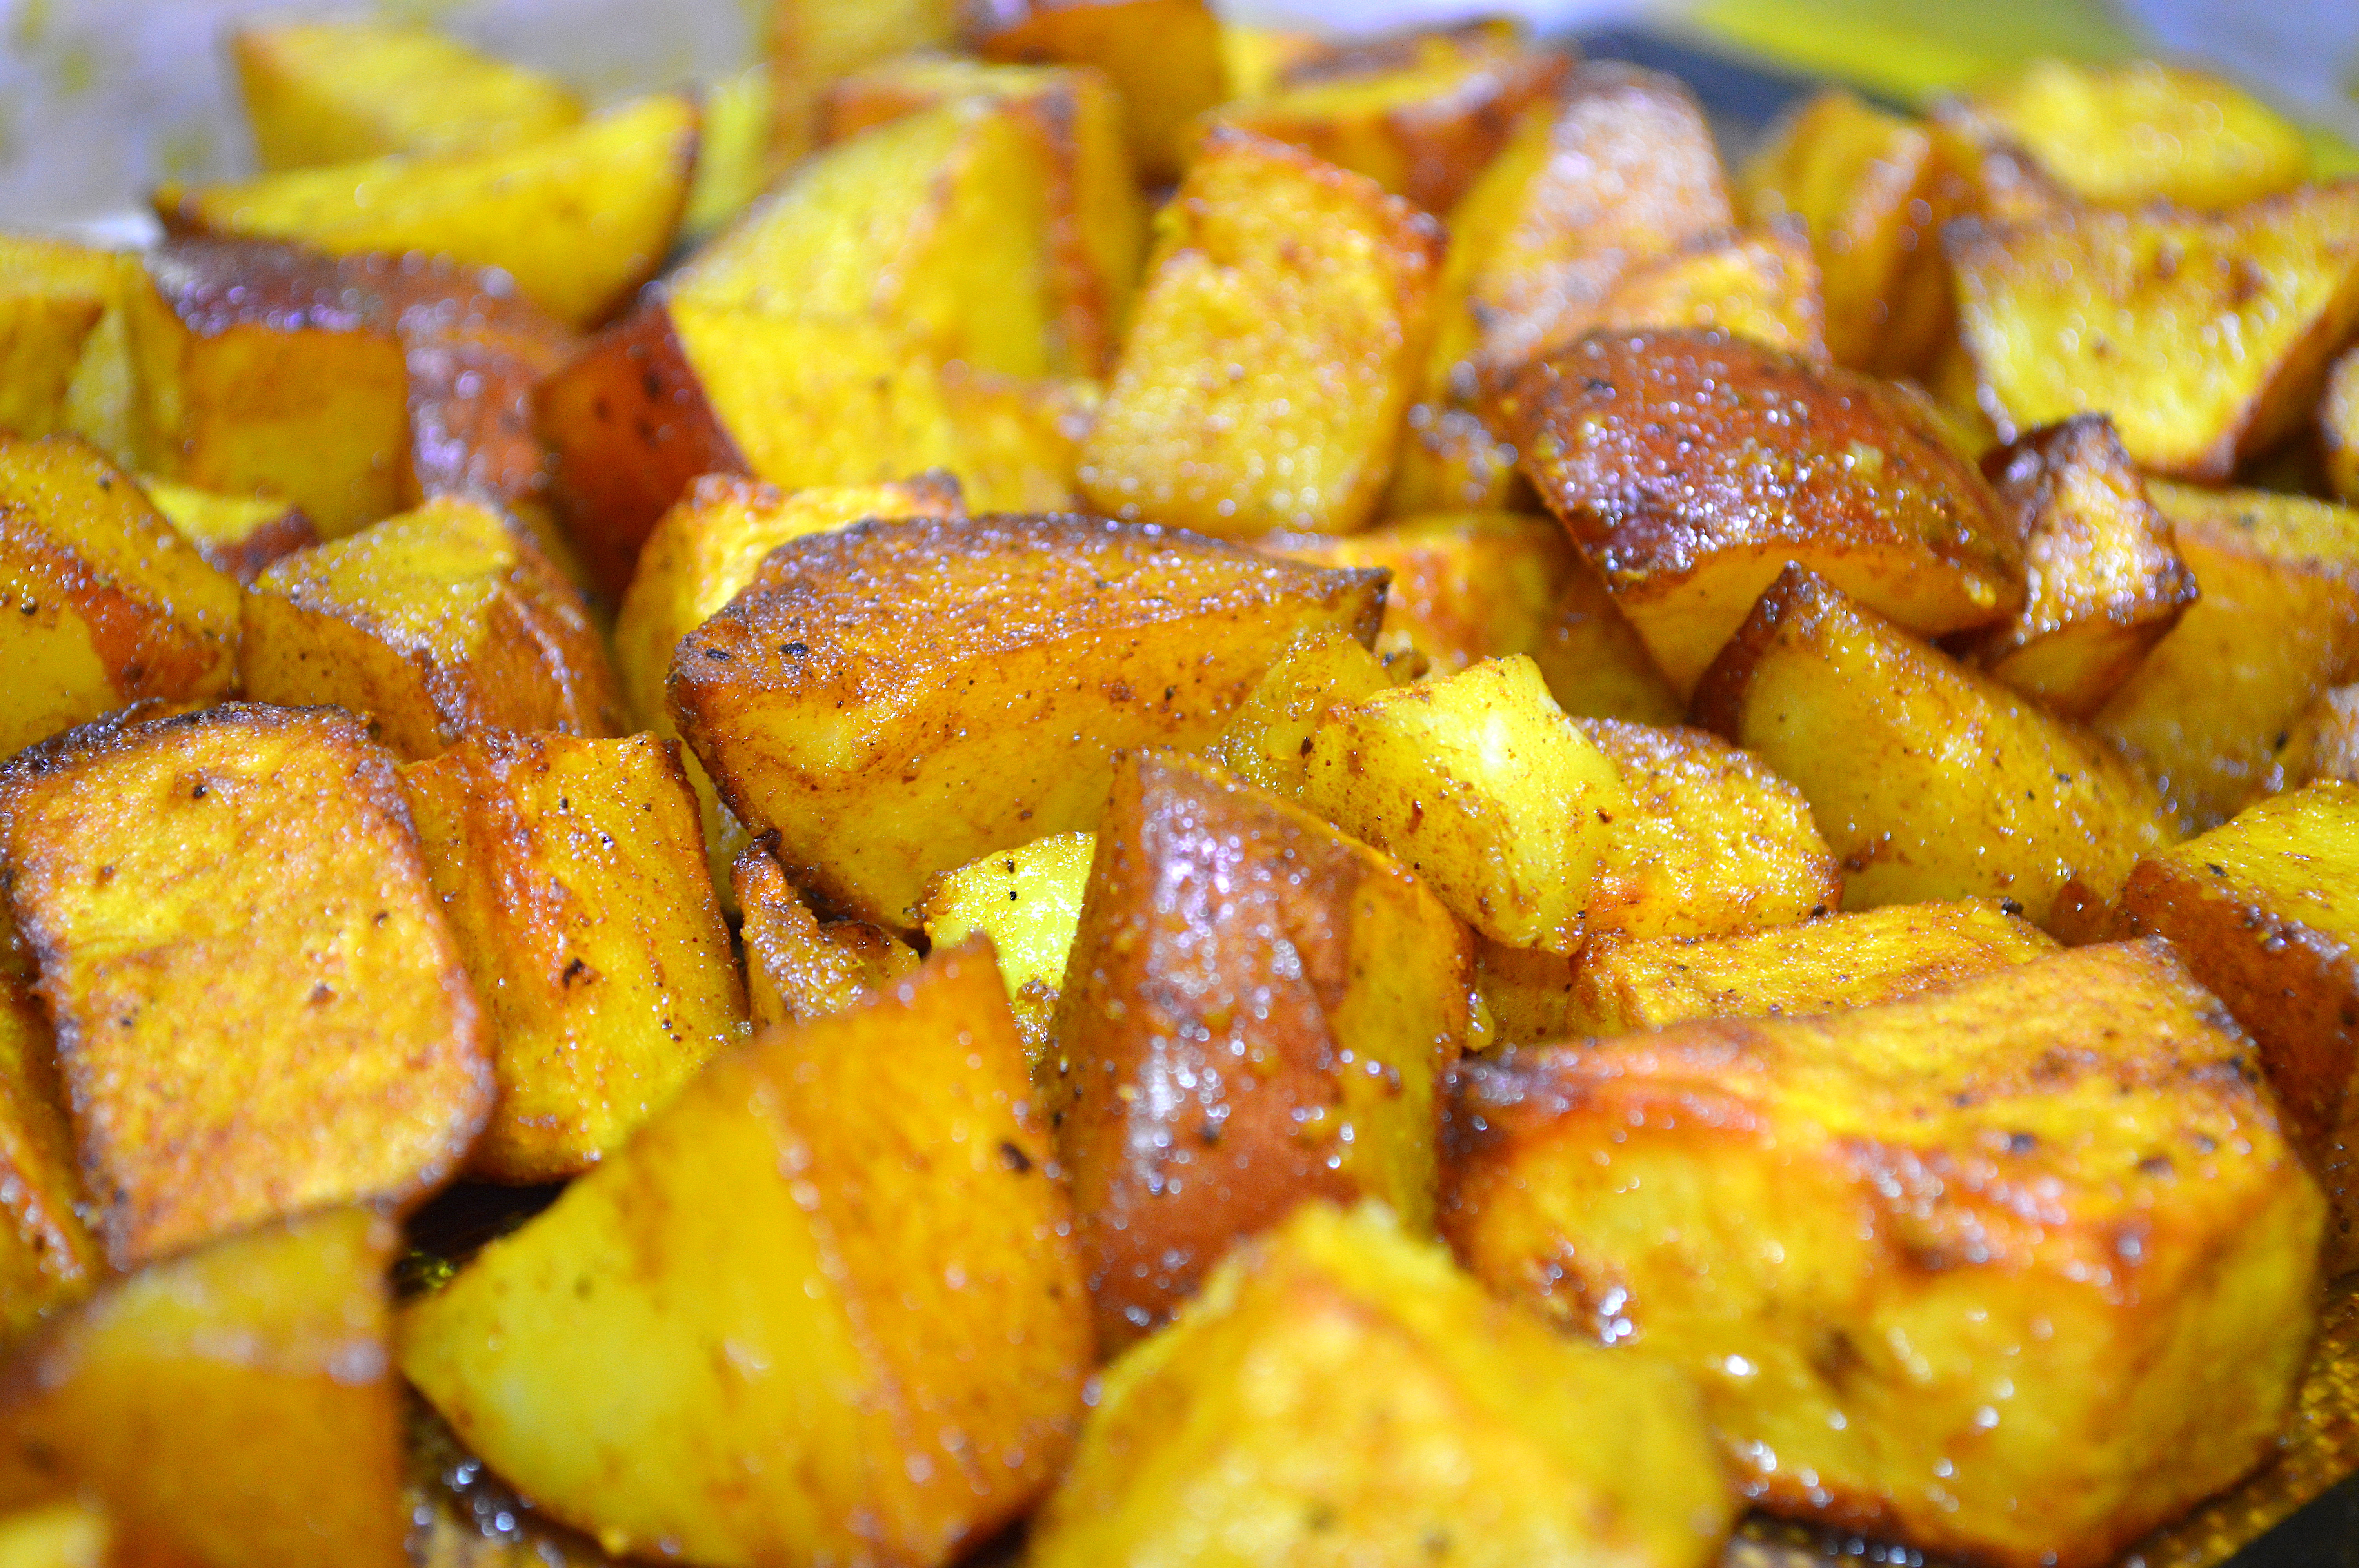 Hali Aloo, turmeric roasted potatoes found in post titled 'Achcha Khana (Good Food)'